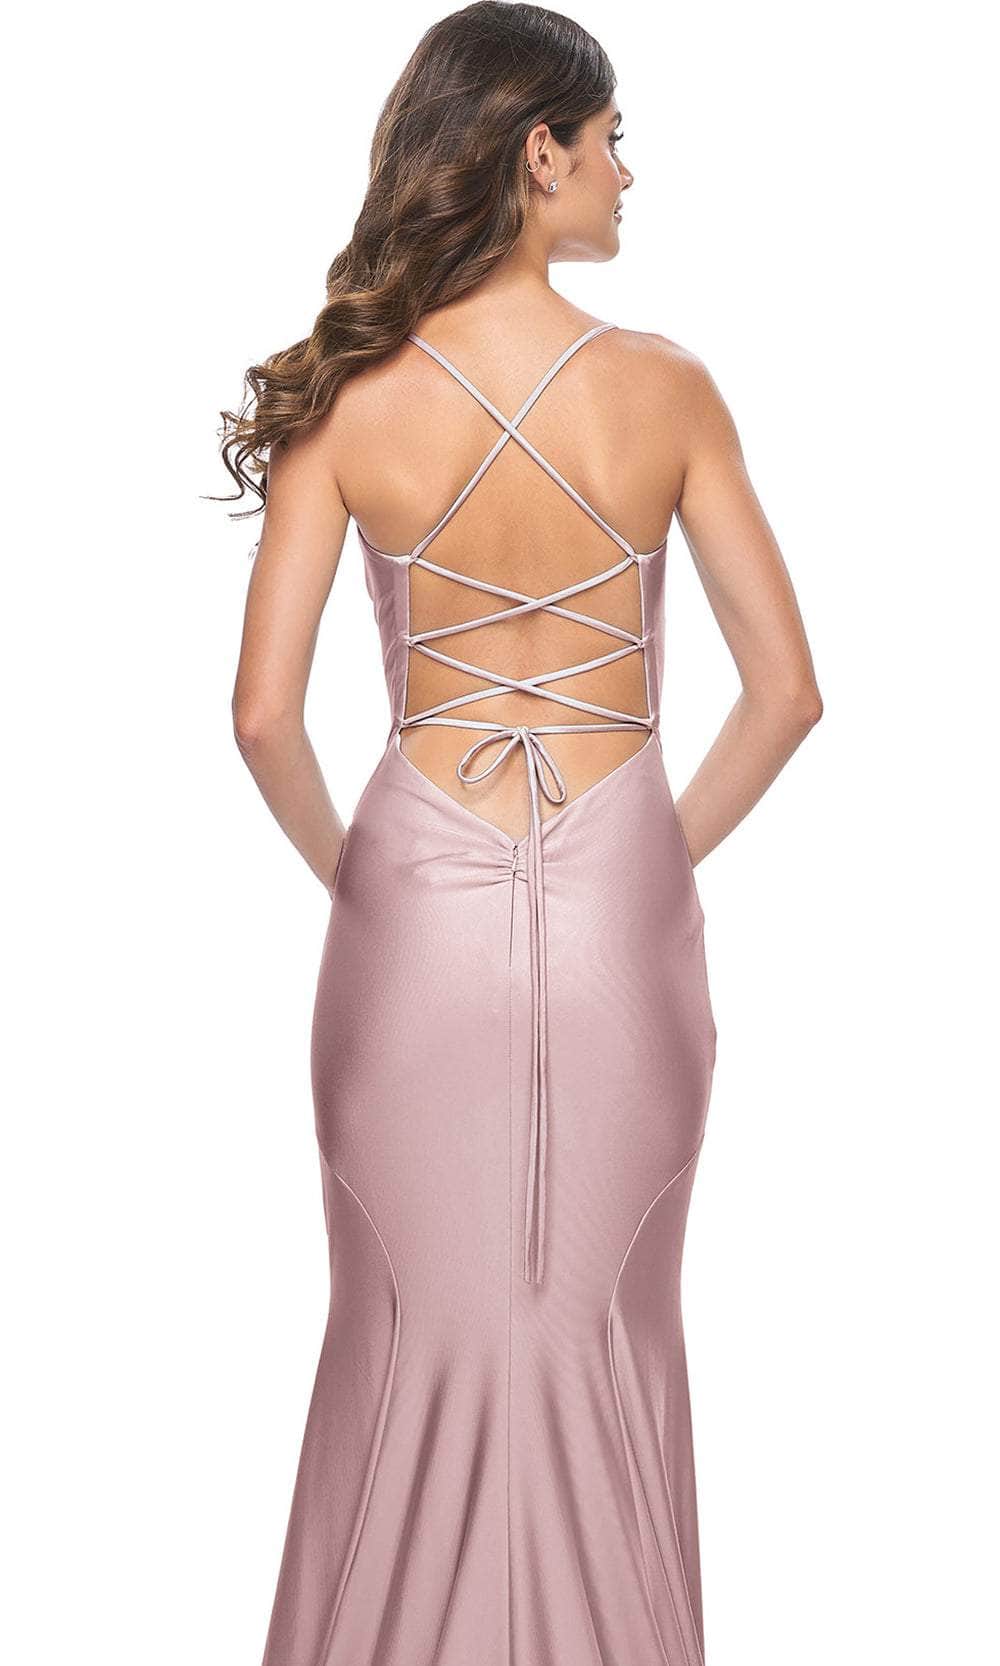 La Femme 31878 - High Slit Jersey Prom Dress Special Occasion Dresses